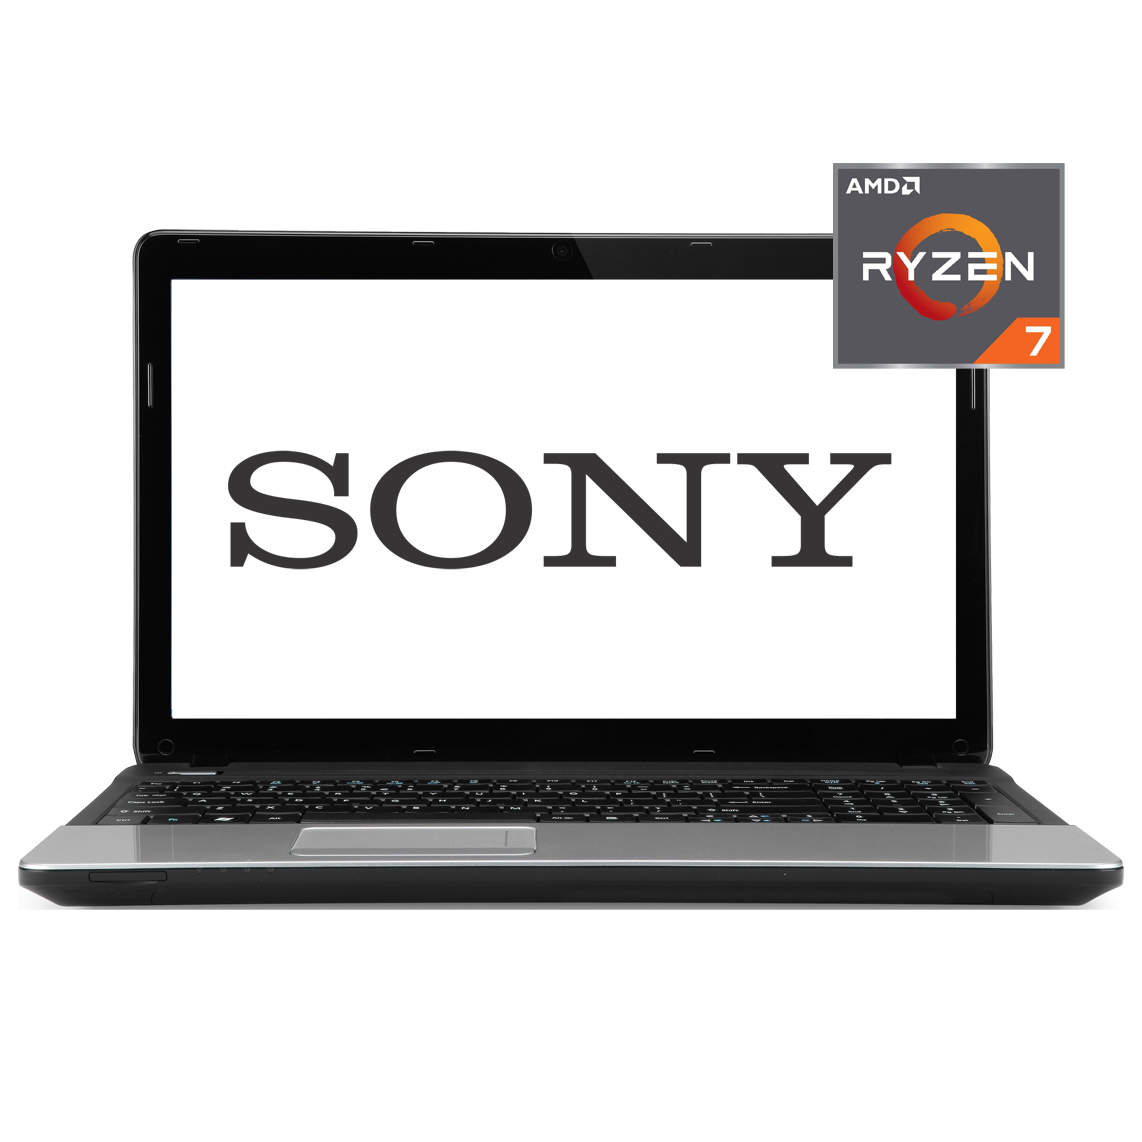 Sony - 13 inch AMD Ryzen 7